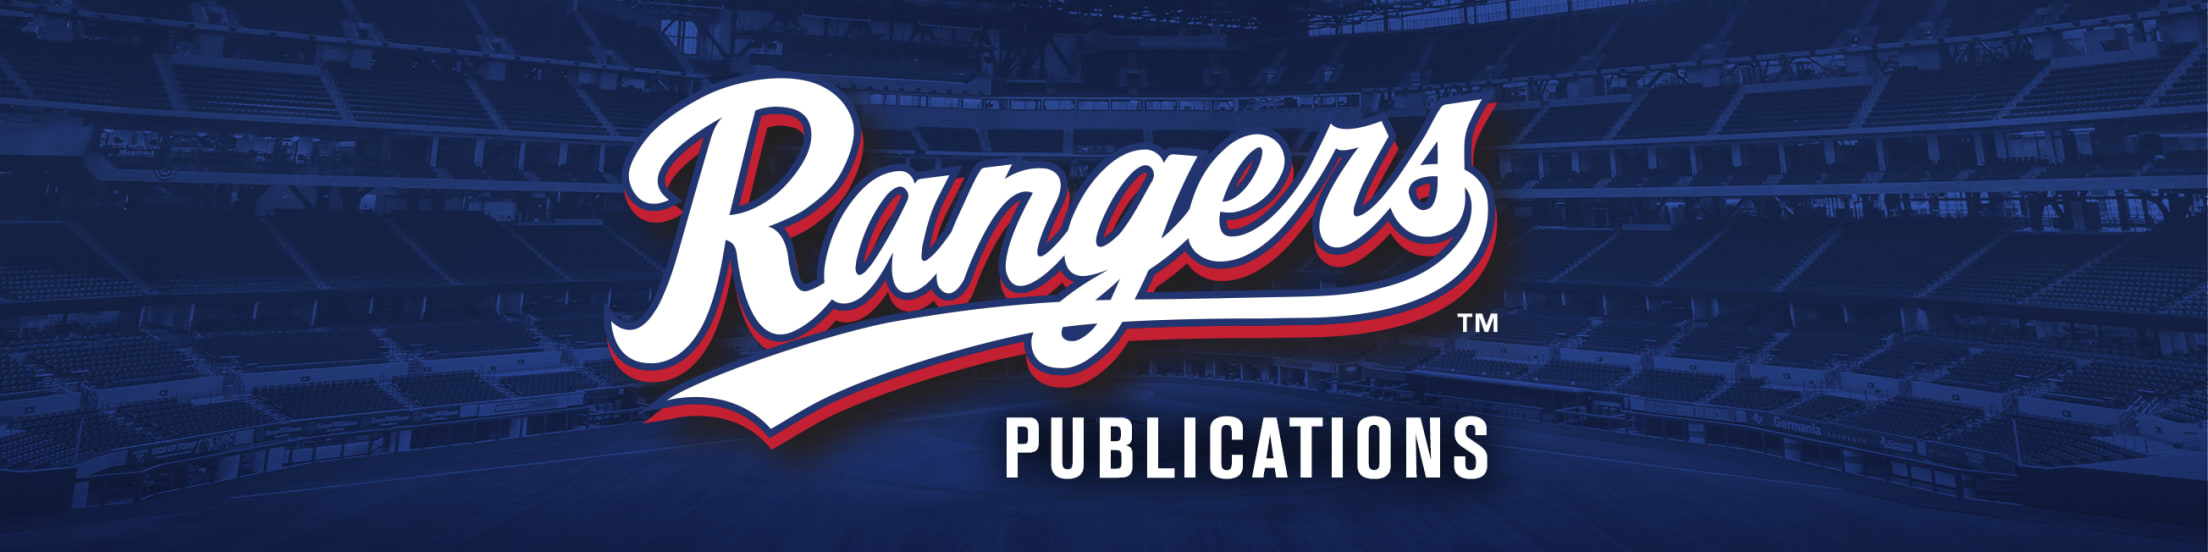 Rangers Publications